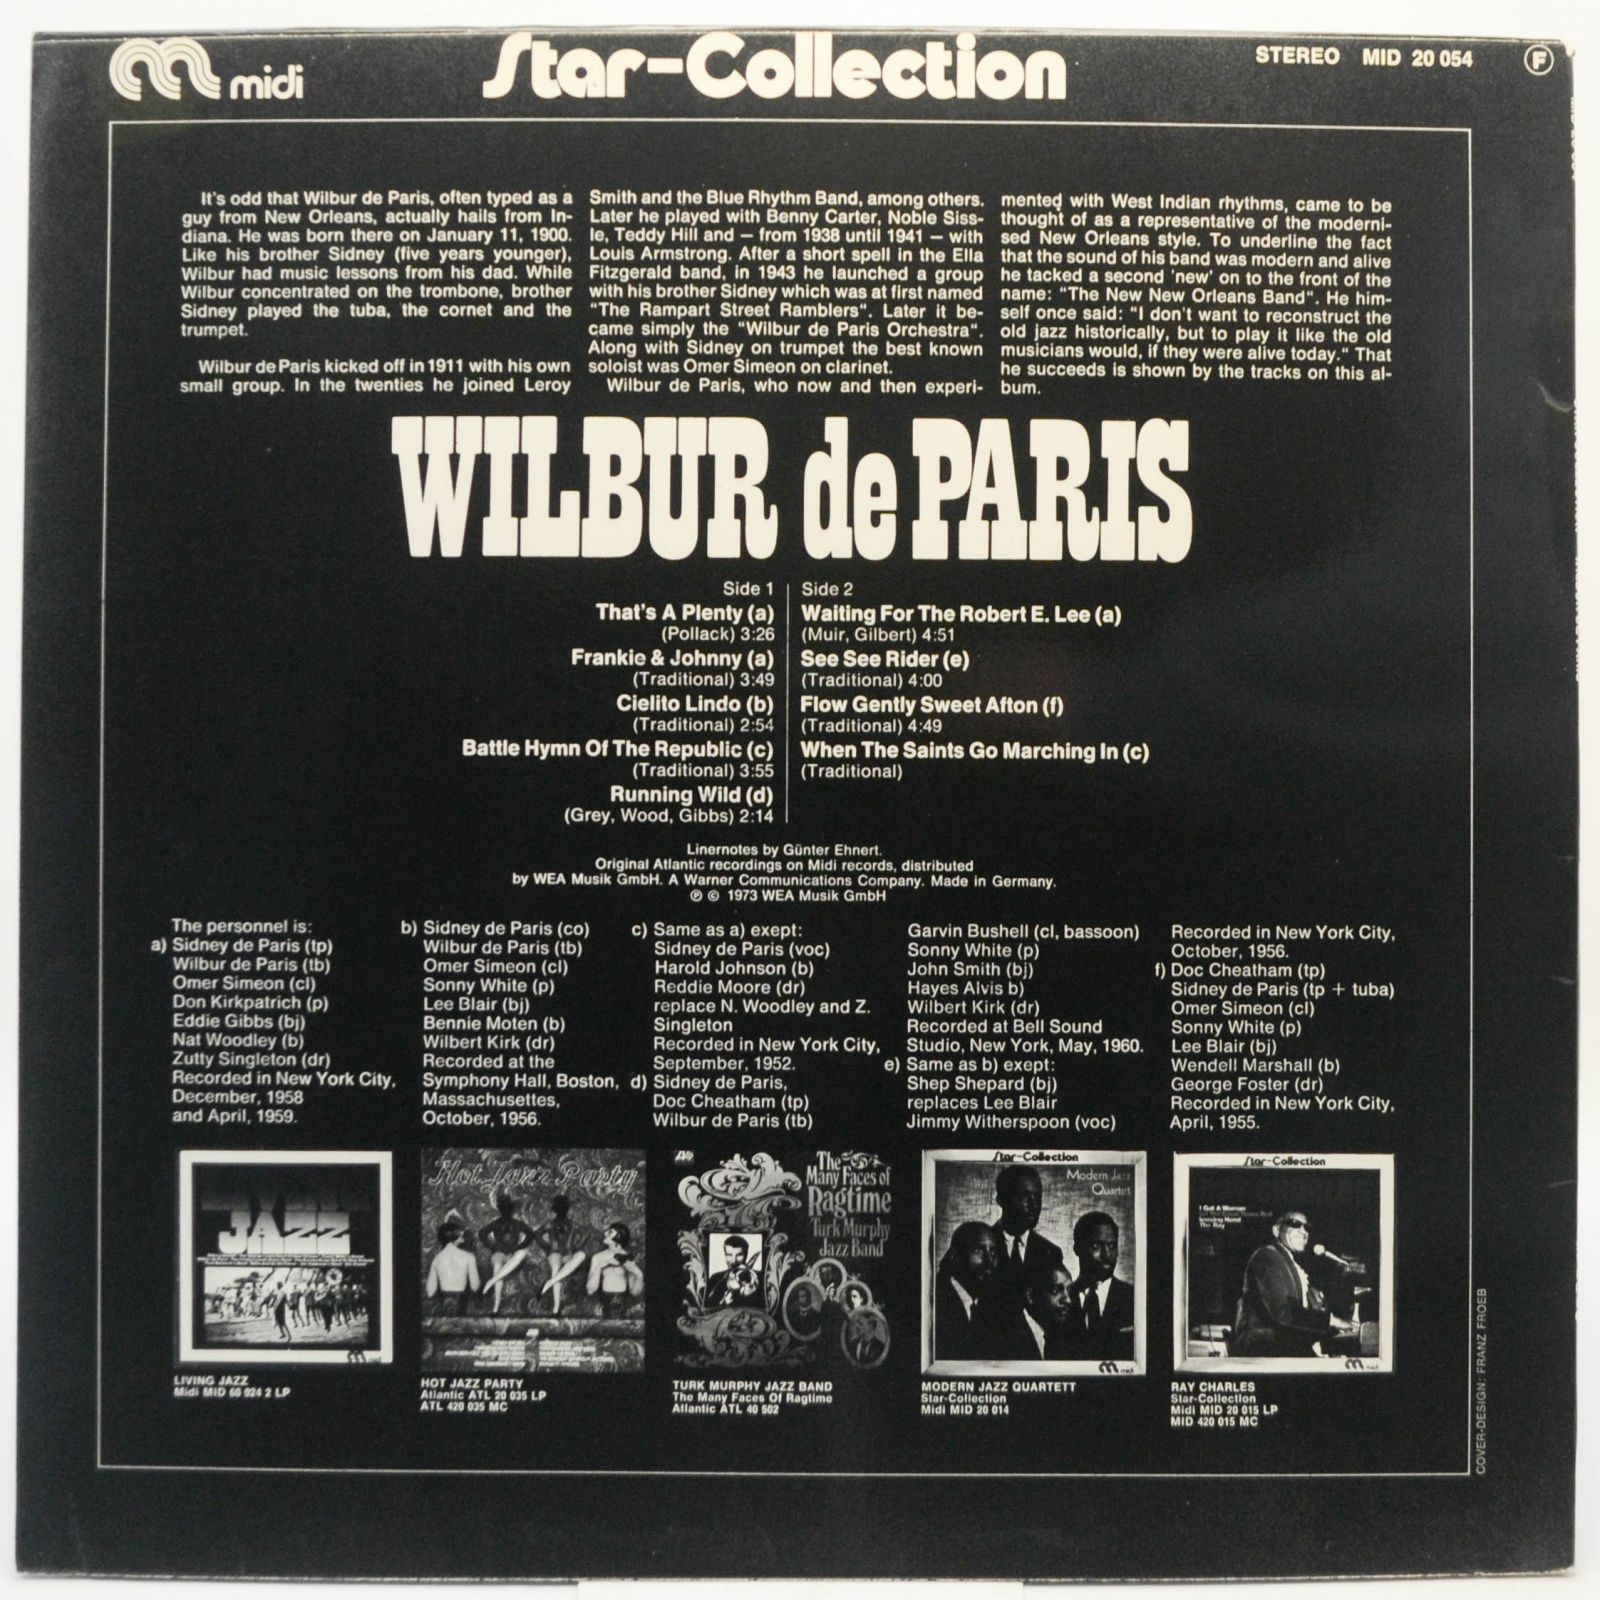 Wilbur De Paris — Star-Collection Wilbur De Paris, 1973